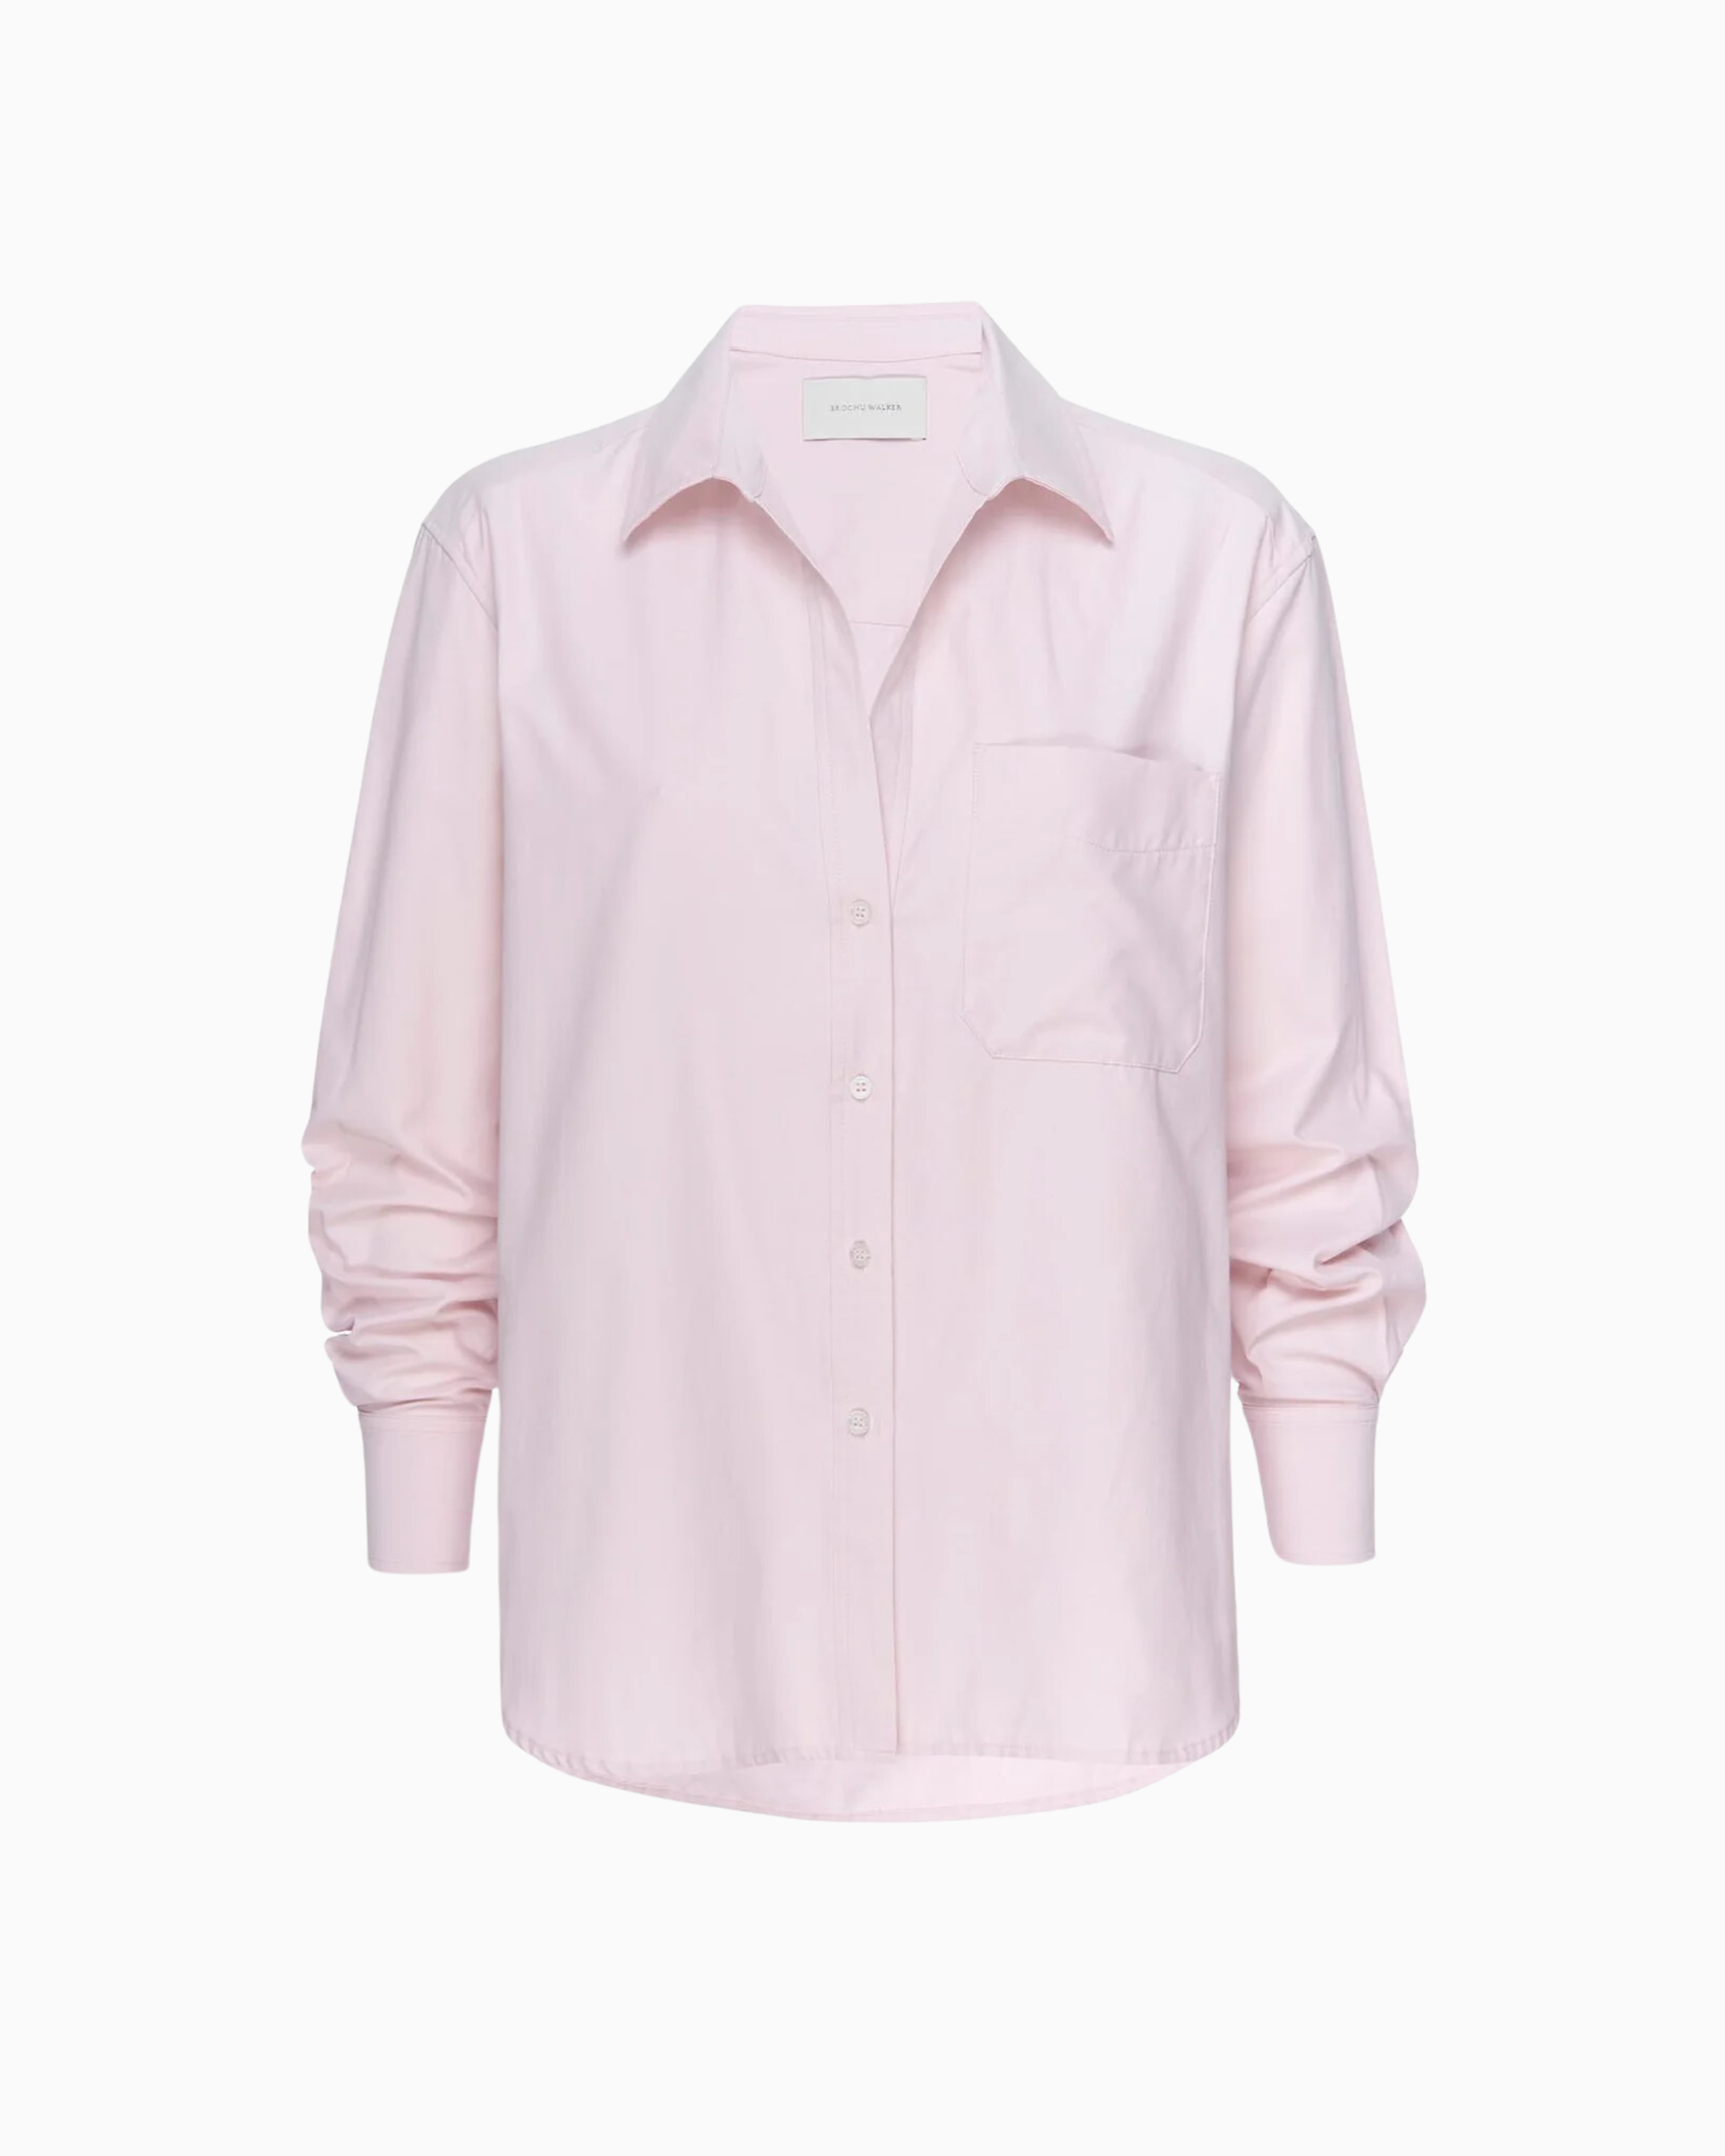 Brochu Walker Everyday Shirt in Rose Quartz